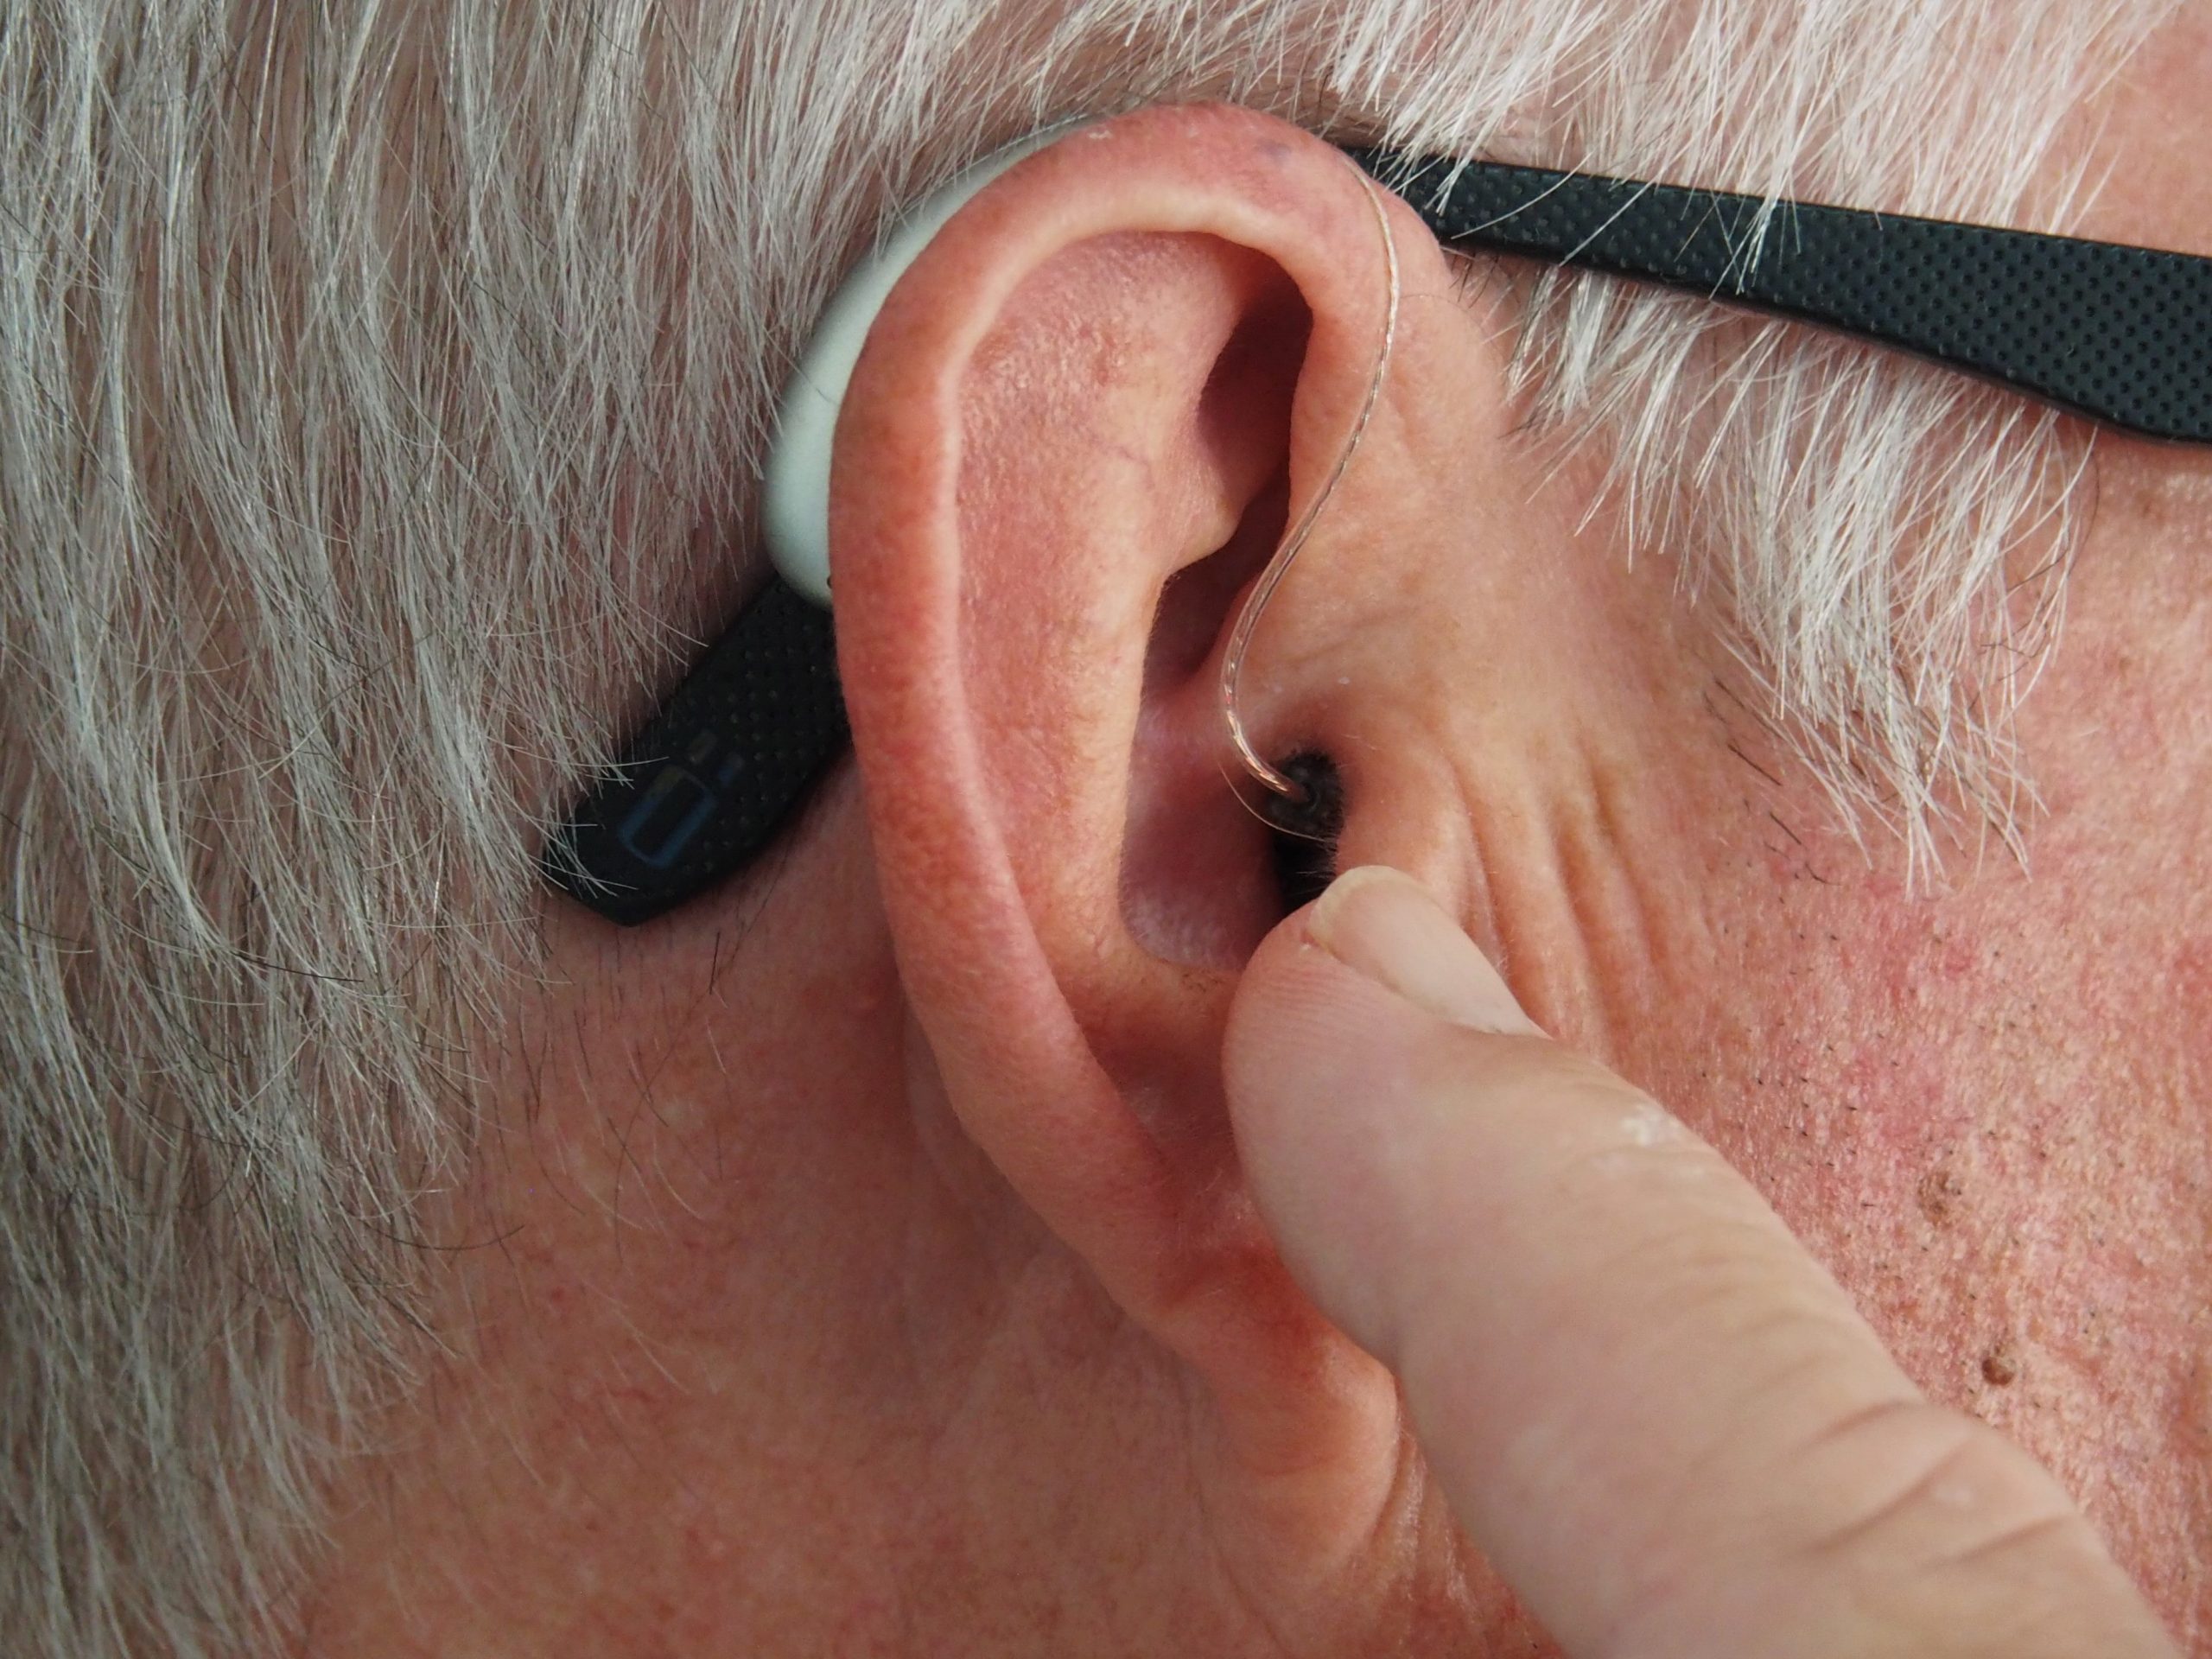 A closeup portrait of showing an old man's ear hair